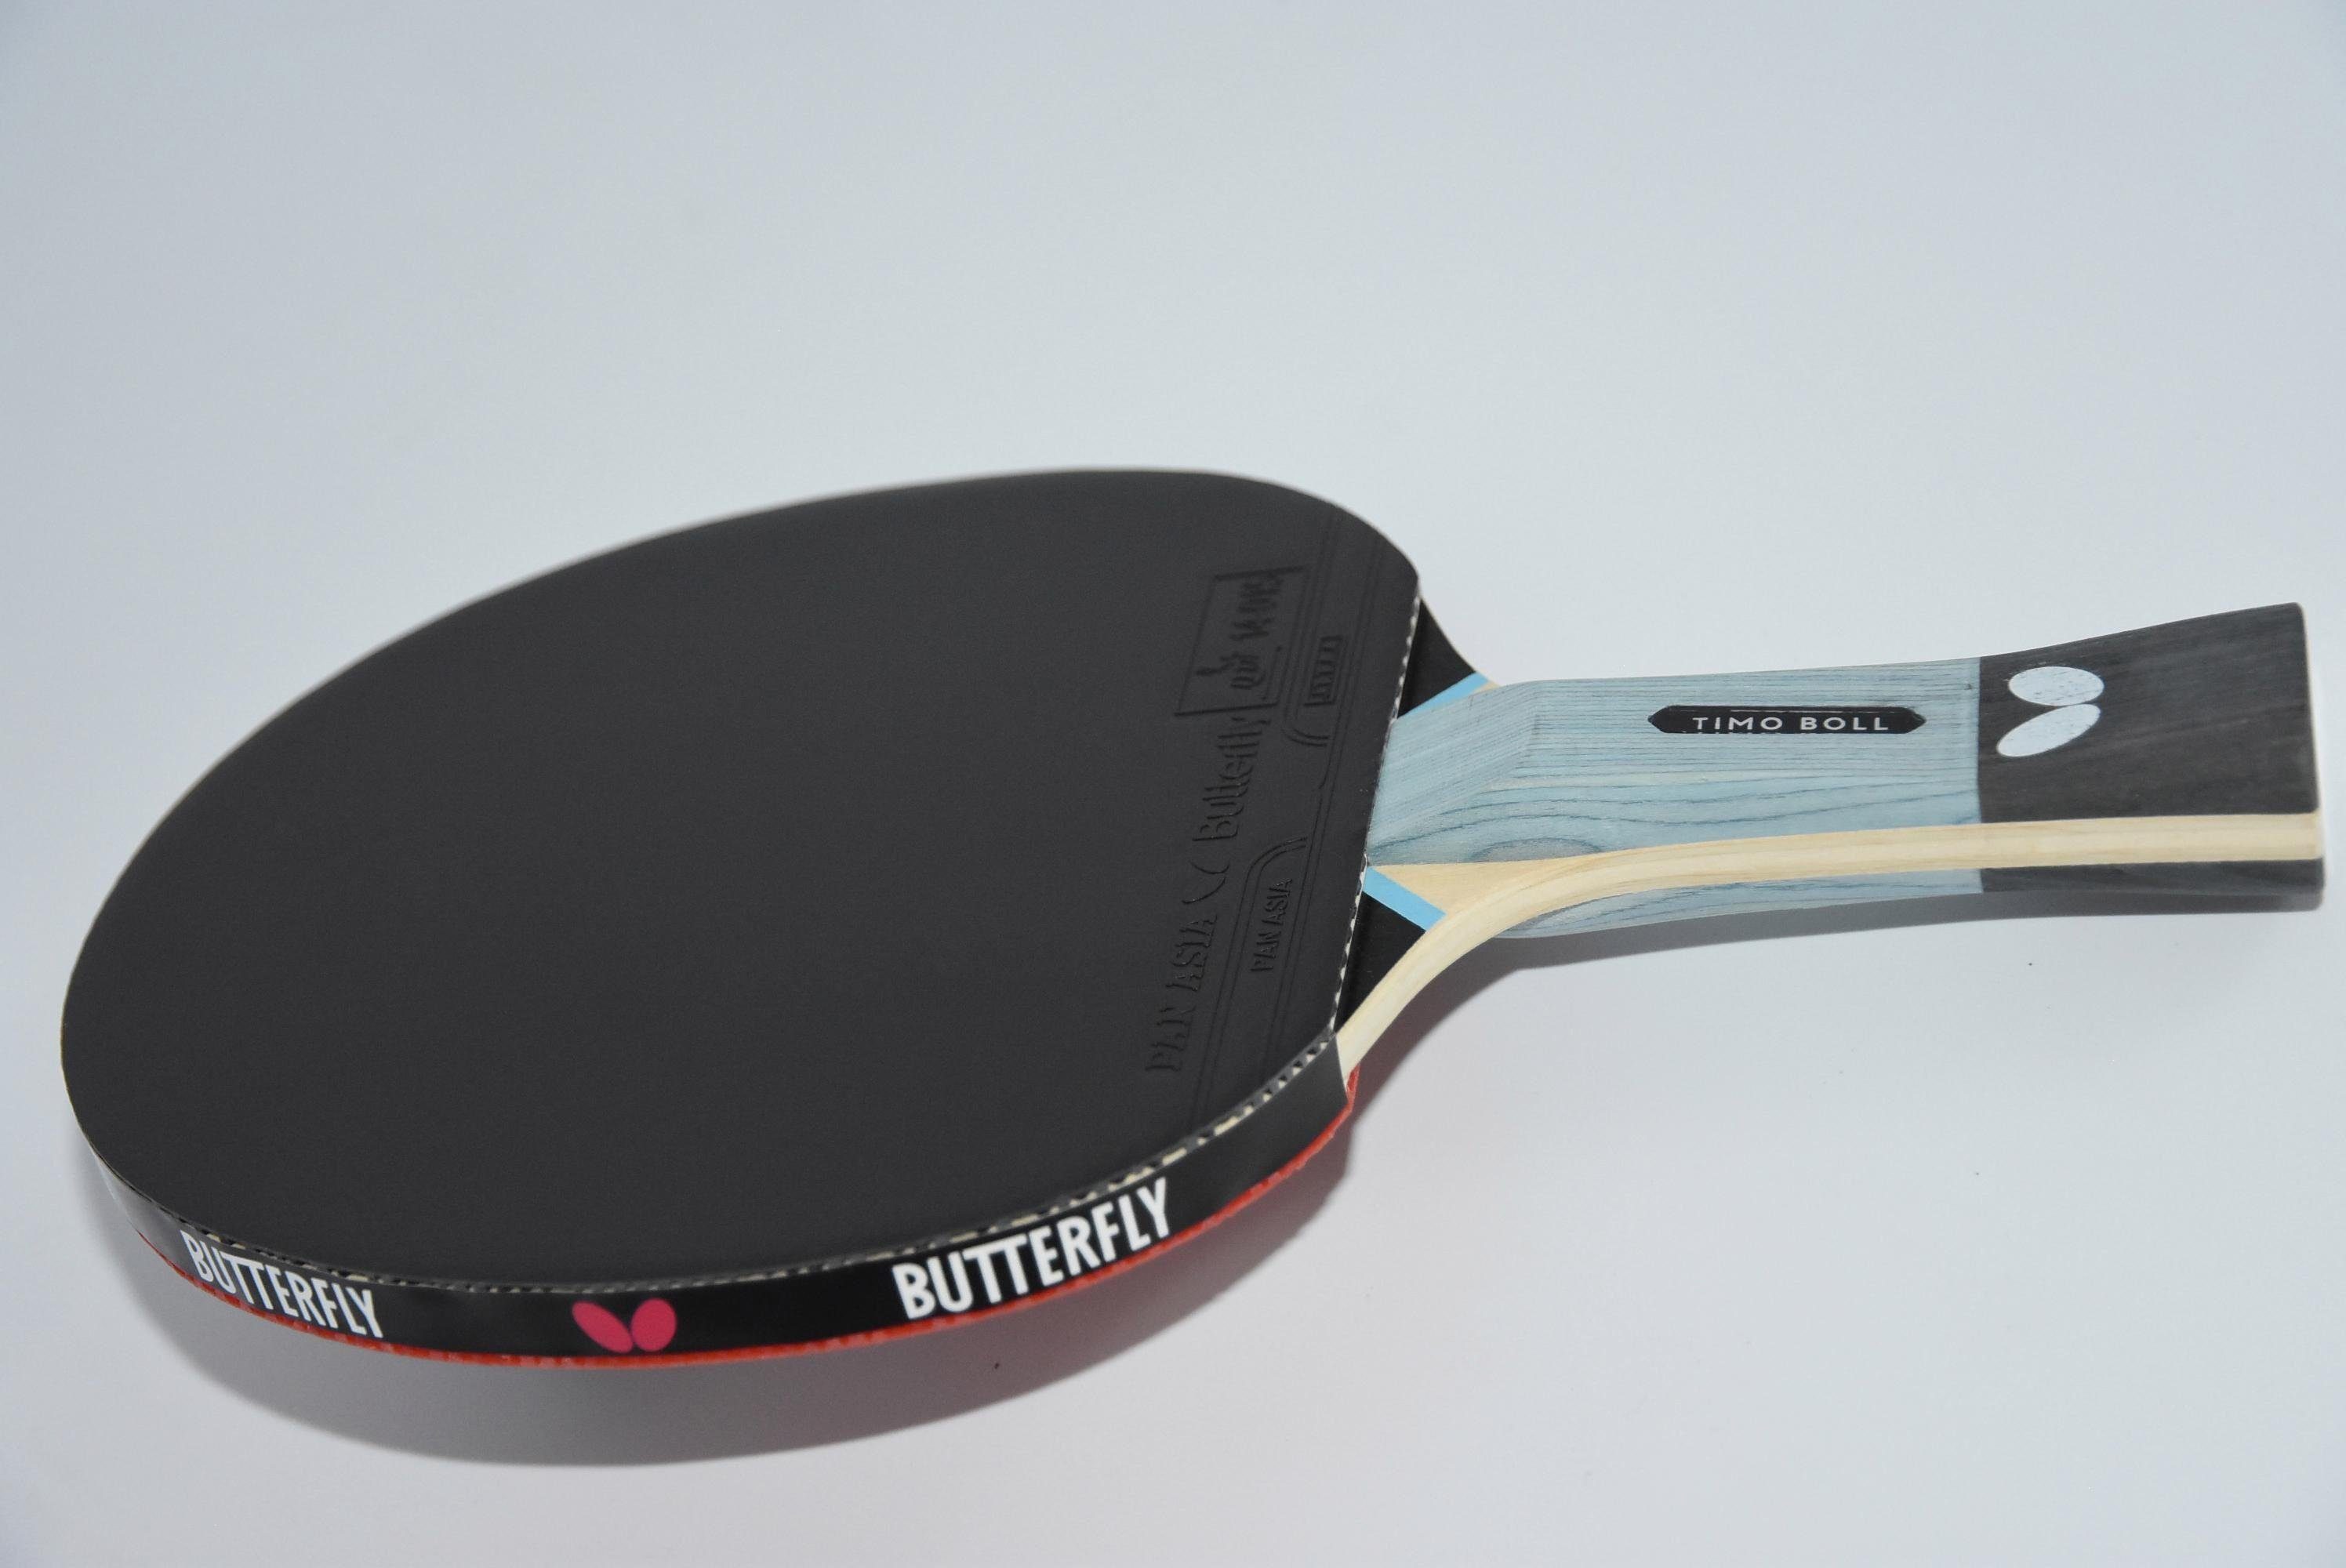 Grifftechnologie Boll "smart.grip" SG77, Tischtennisschläger Butterfly Einzigartige Timo